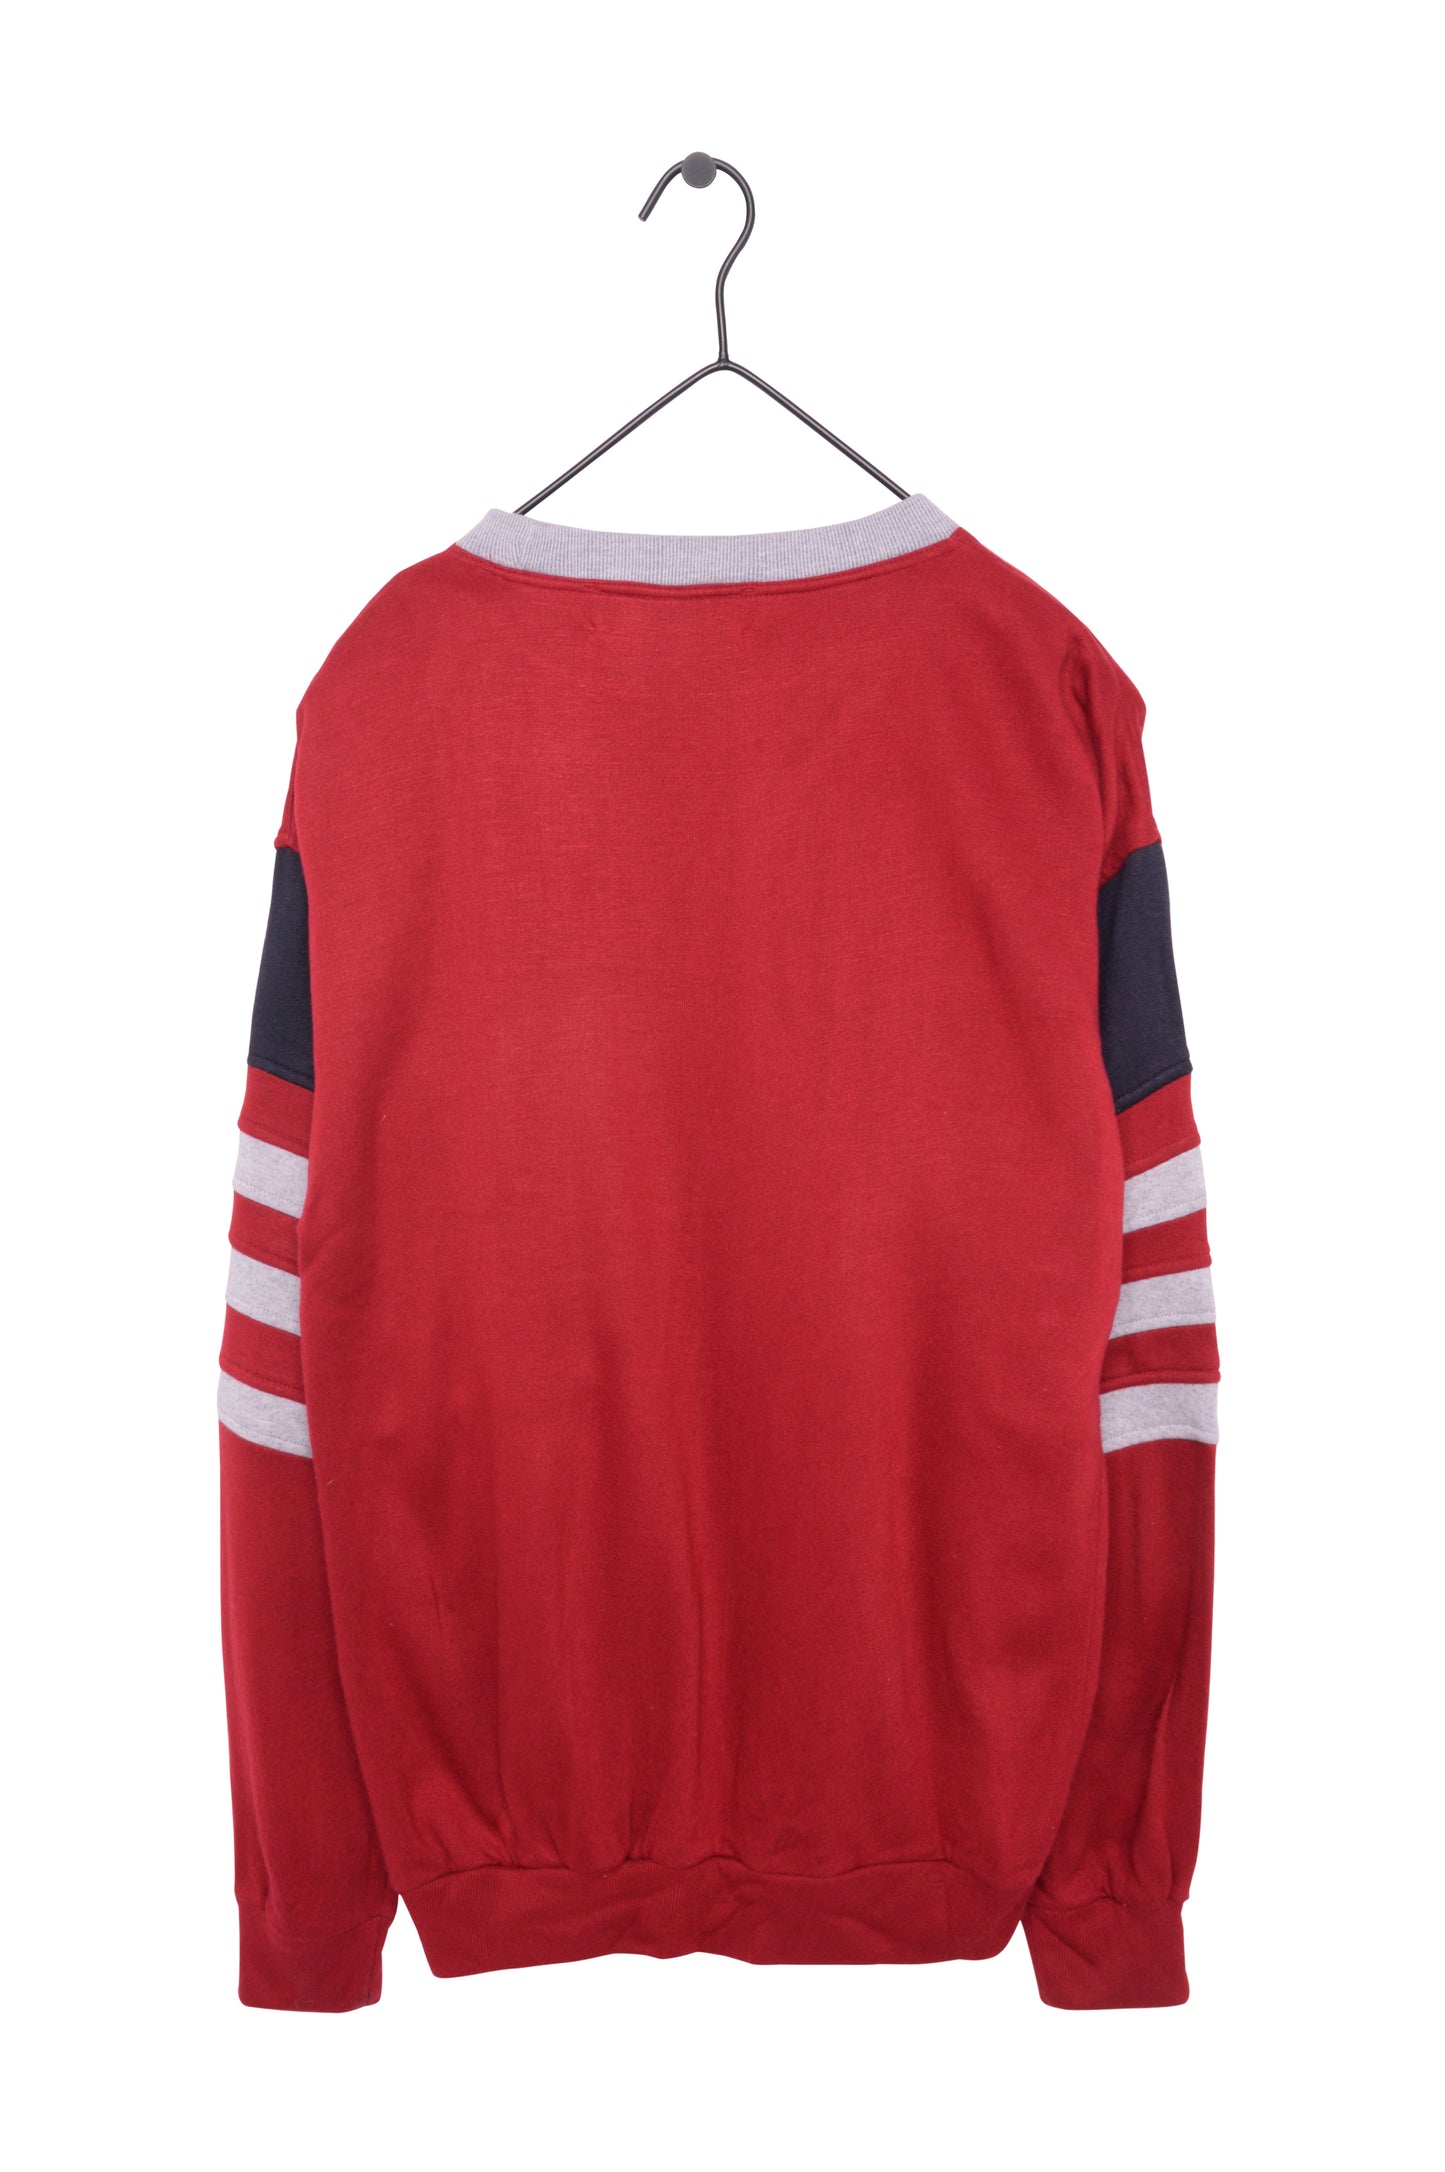 Spalding Striped Sweatshirt